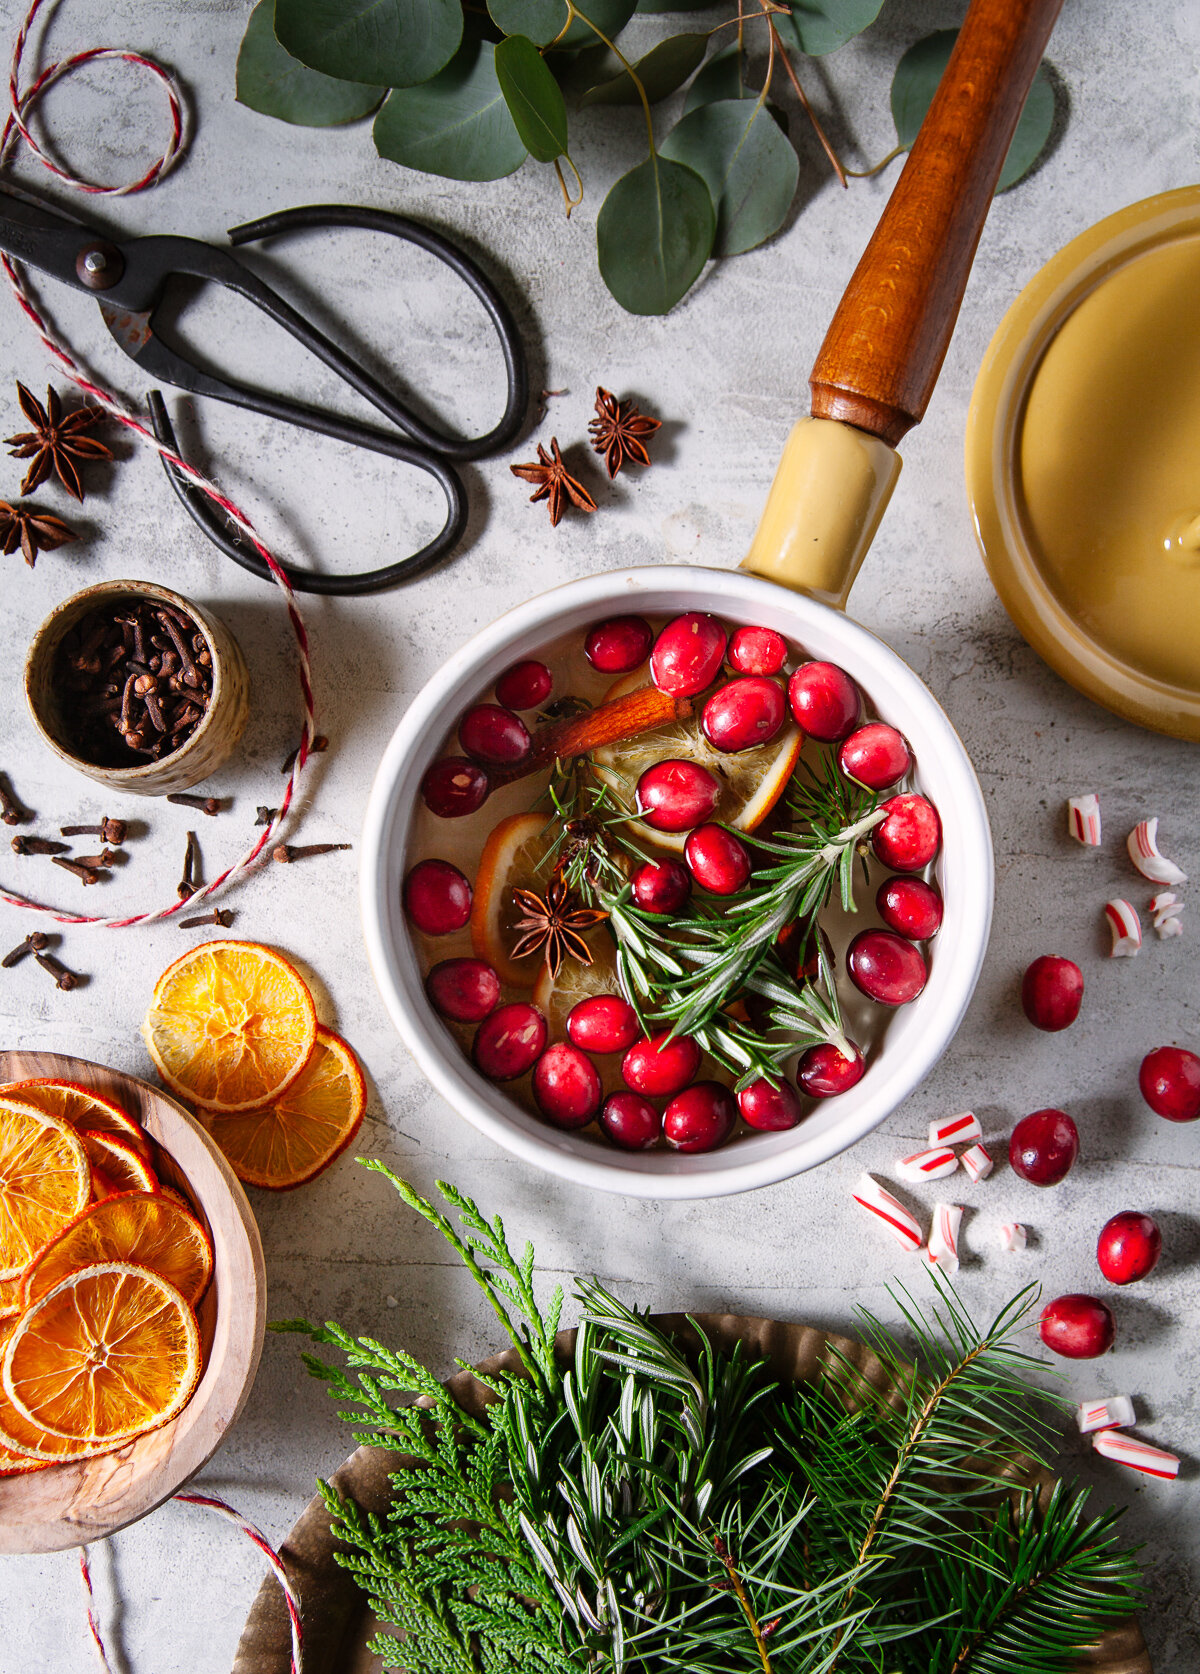 11 simple homemade stovetop simmer pot potpourri recipes — Brand Spanking  You